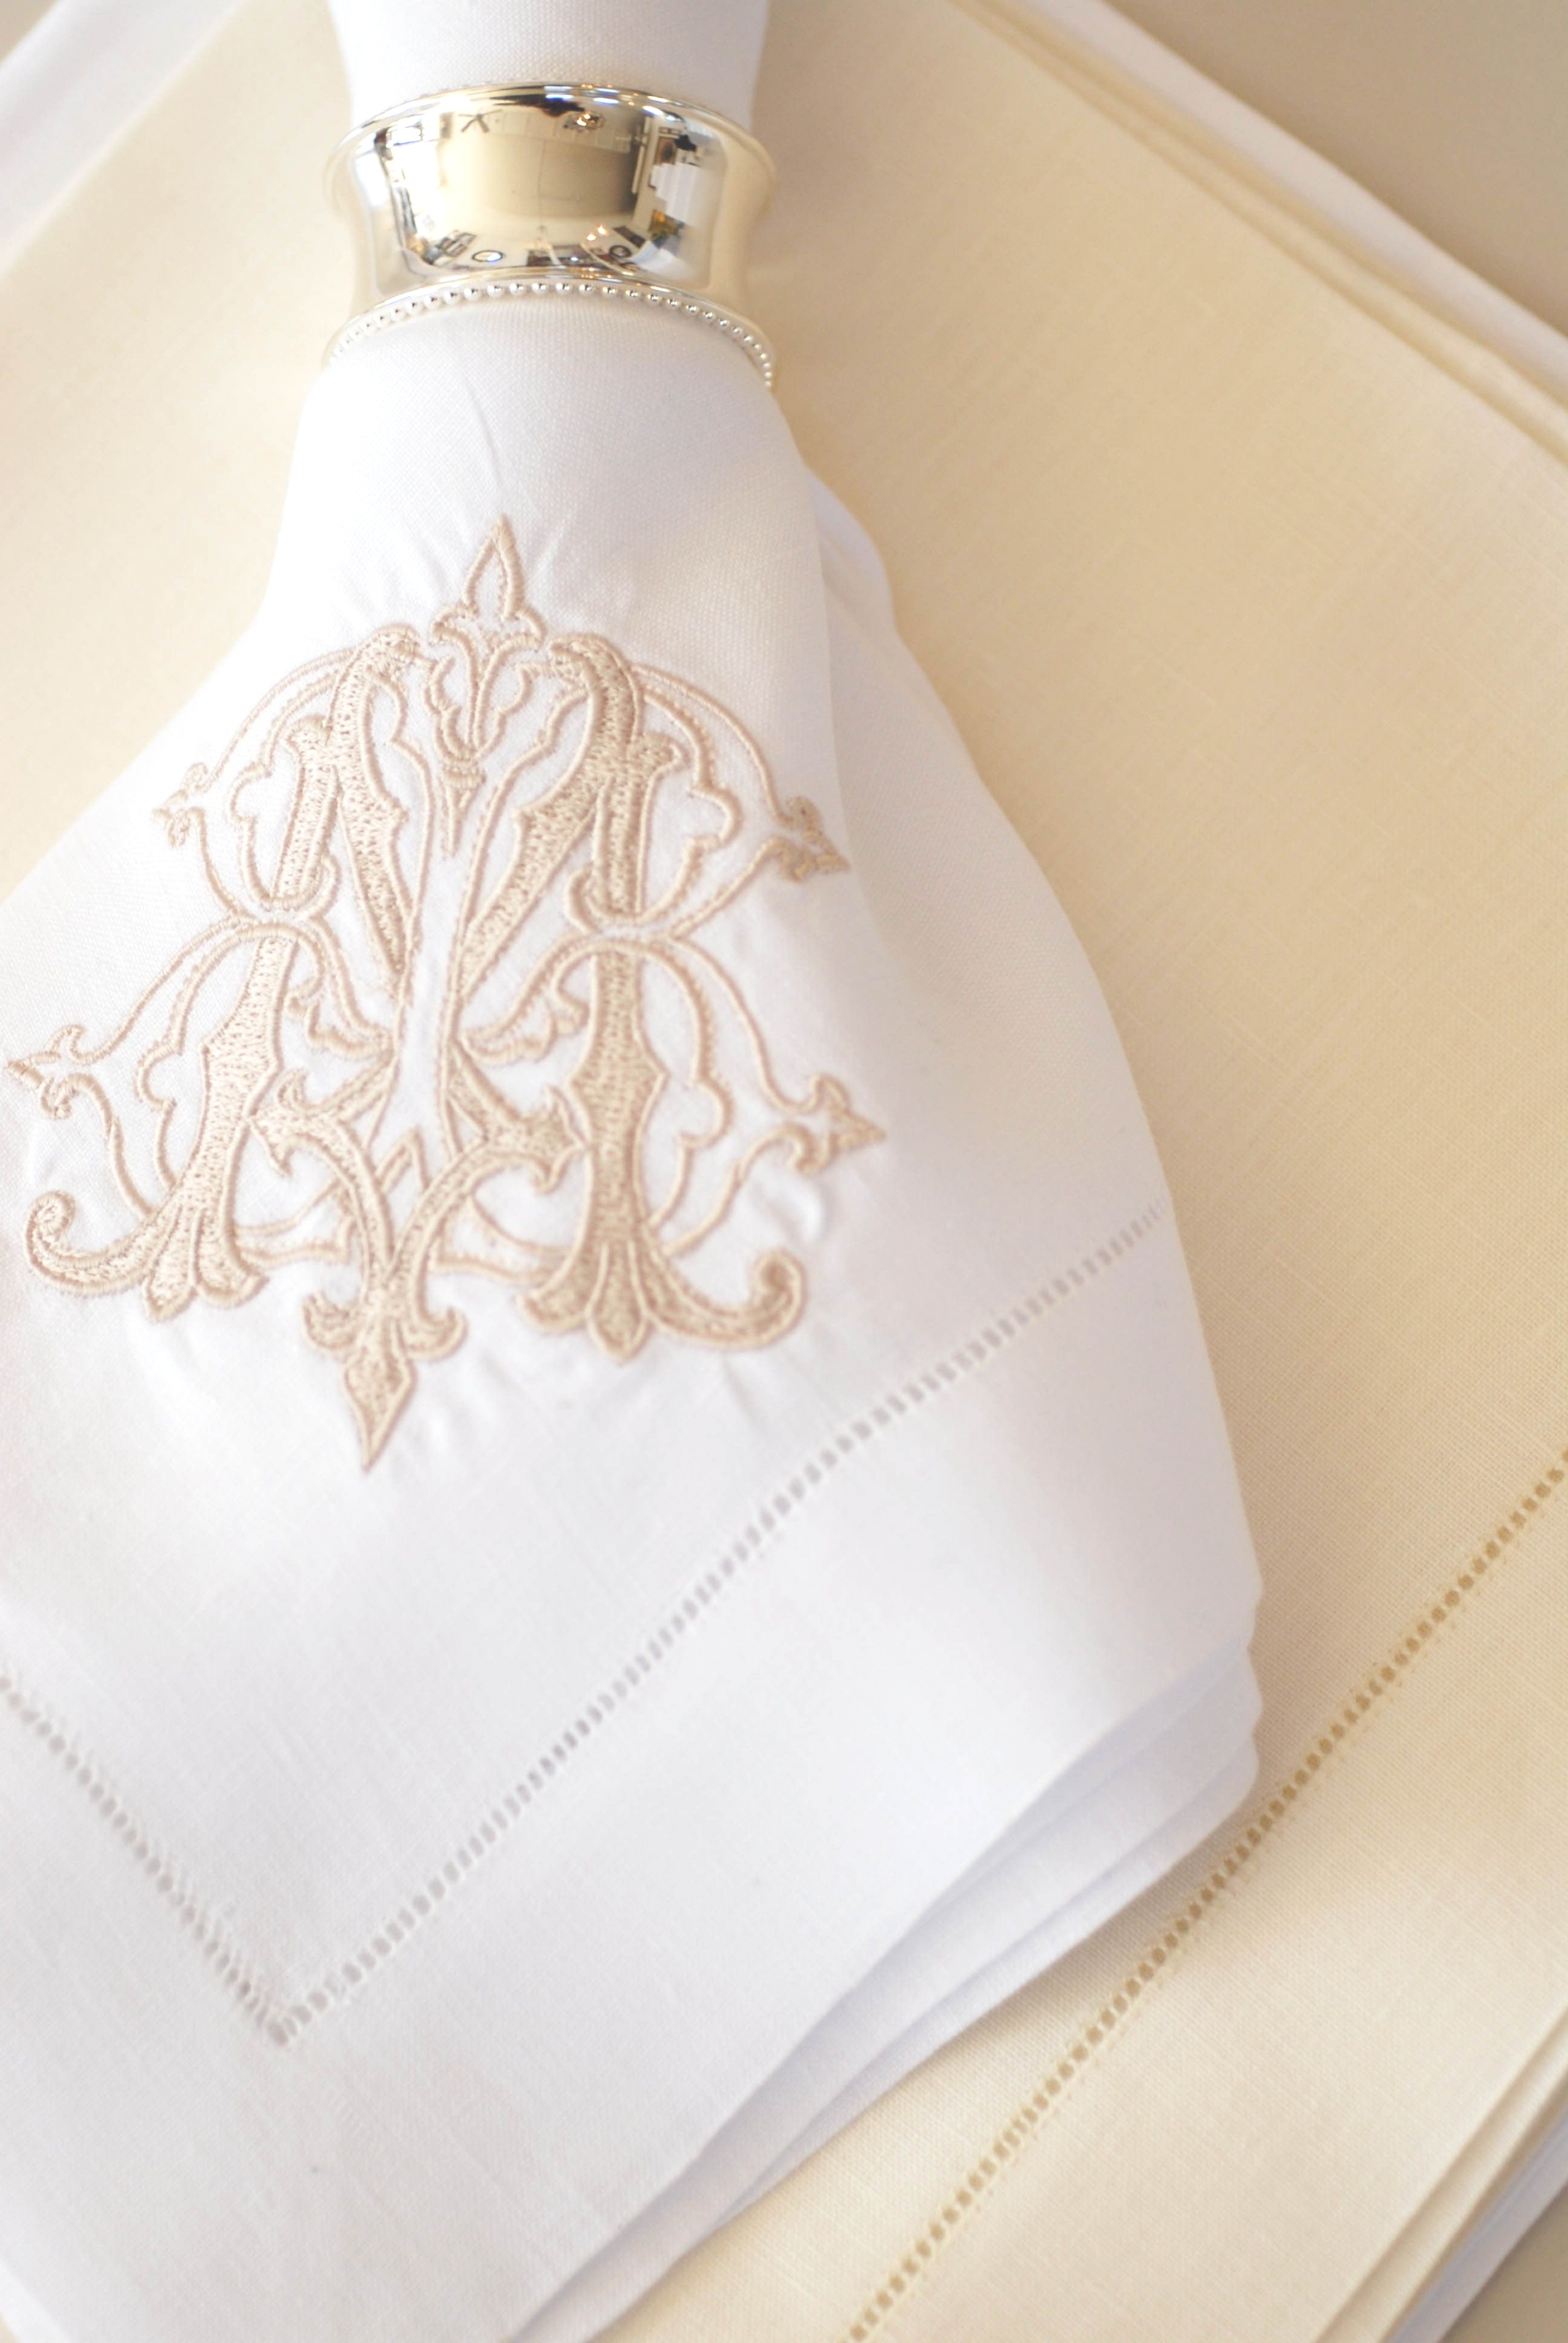 monogrammed table linens | Embroidery Napkins - Buy Monogram Napkin,Hemstitch Napkin ..